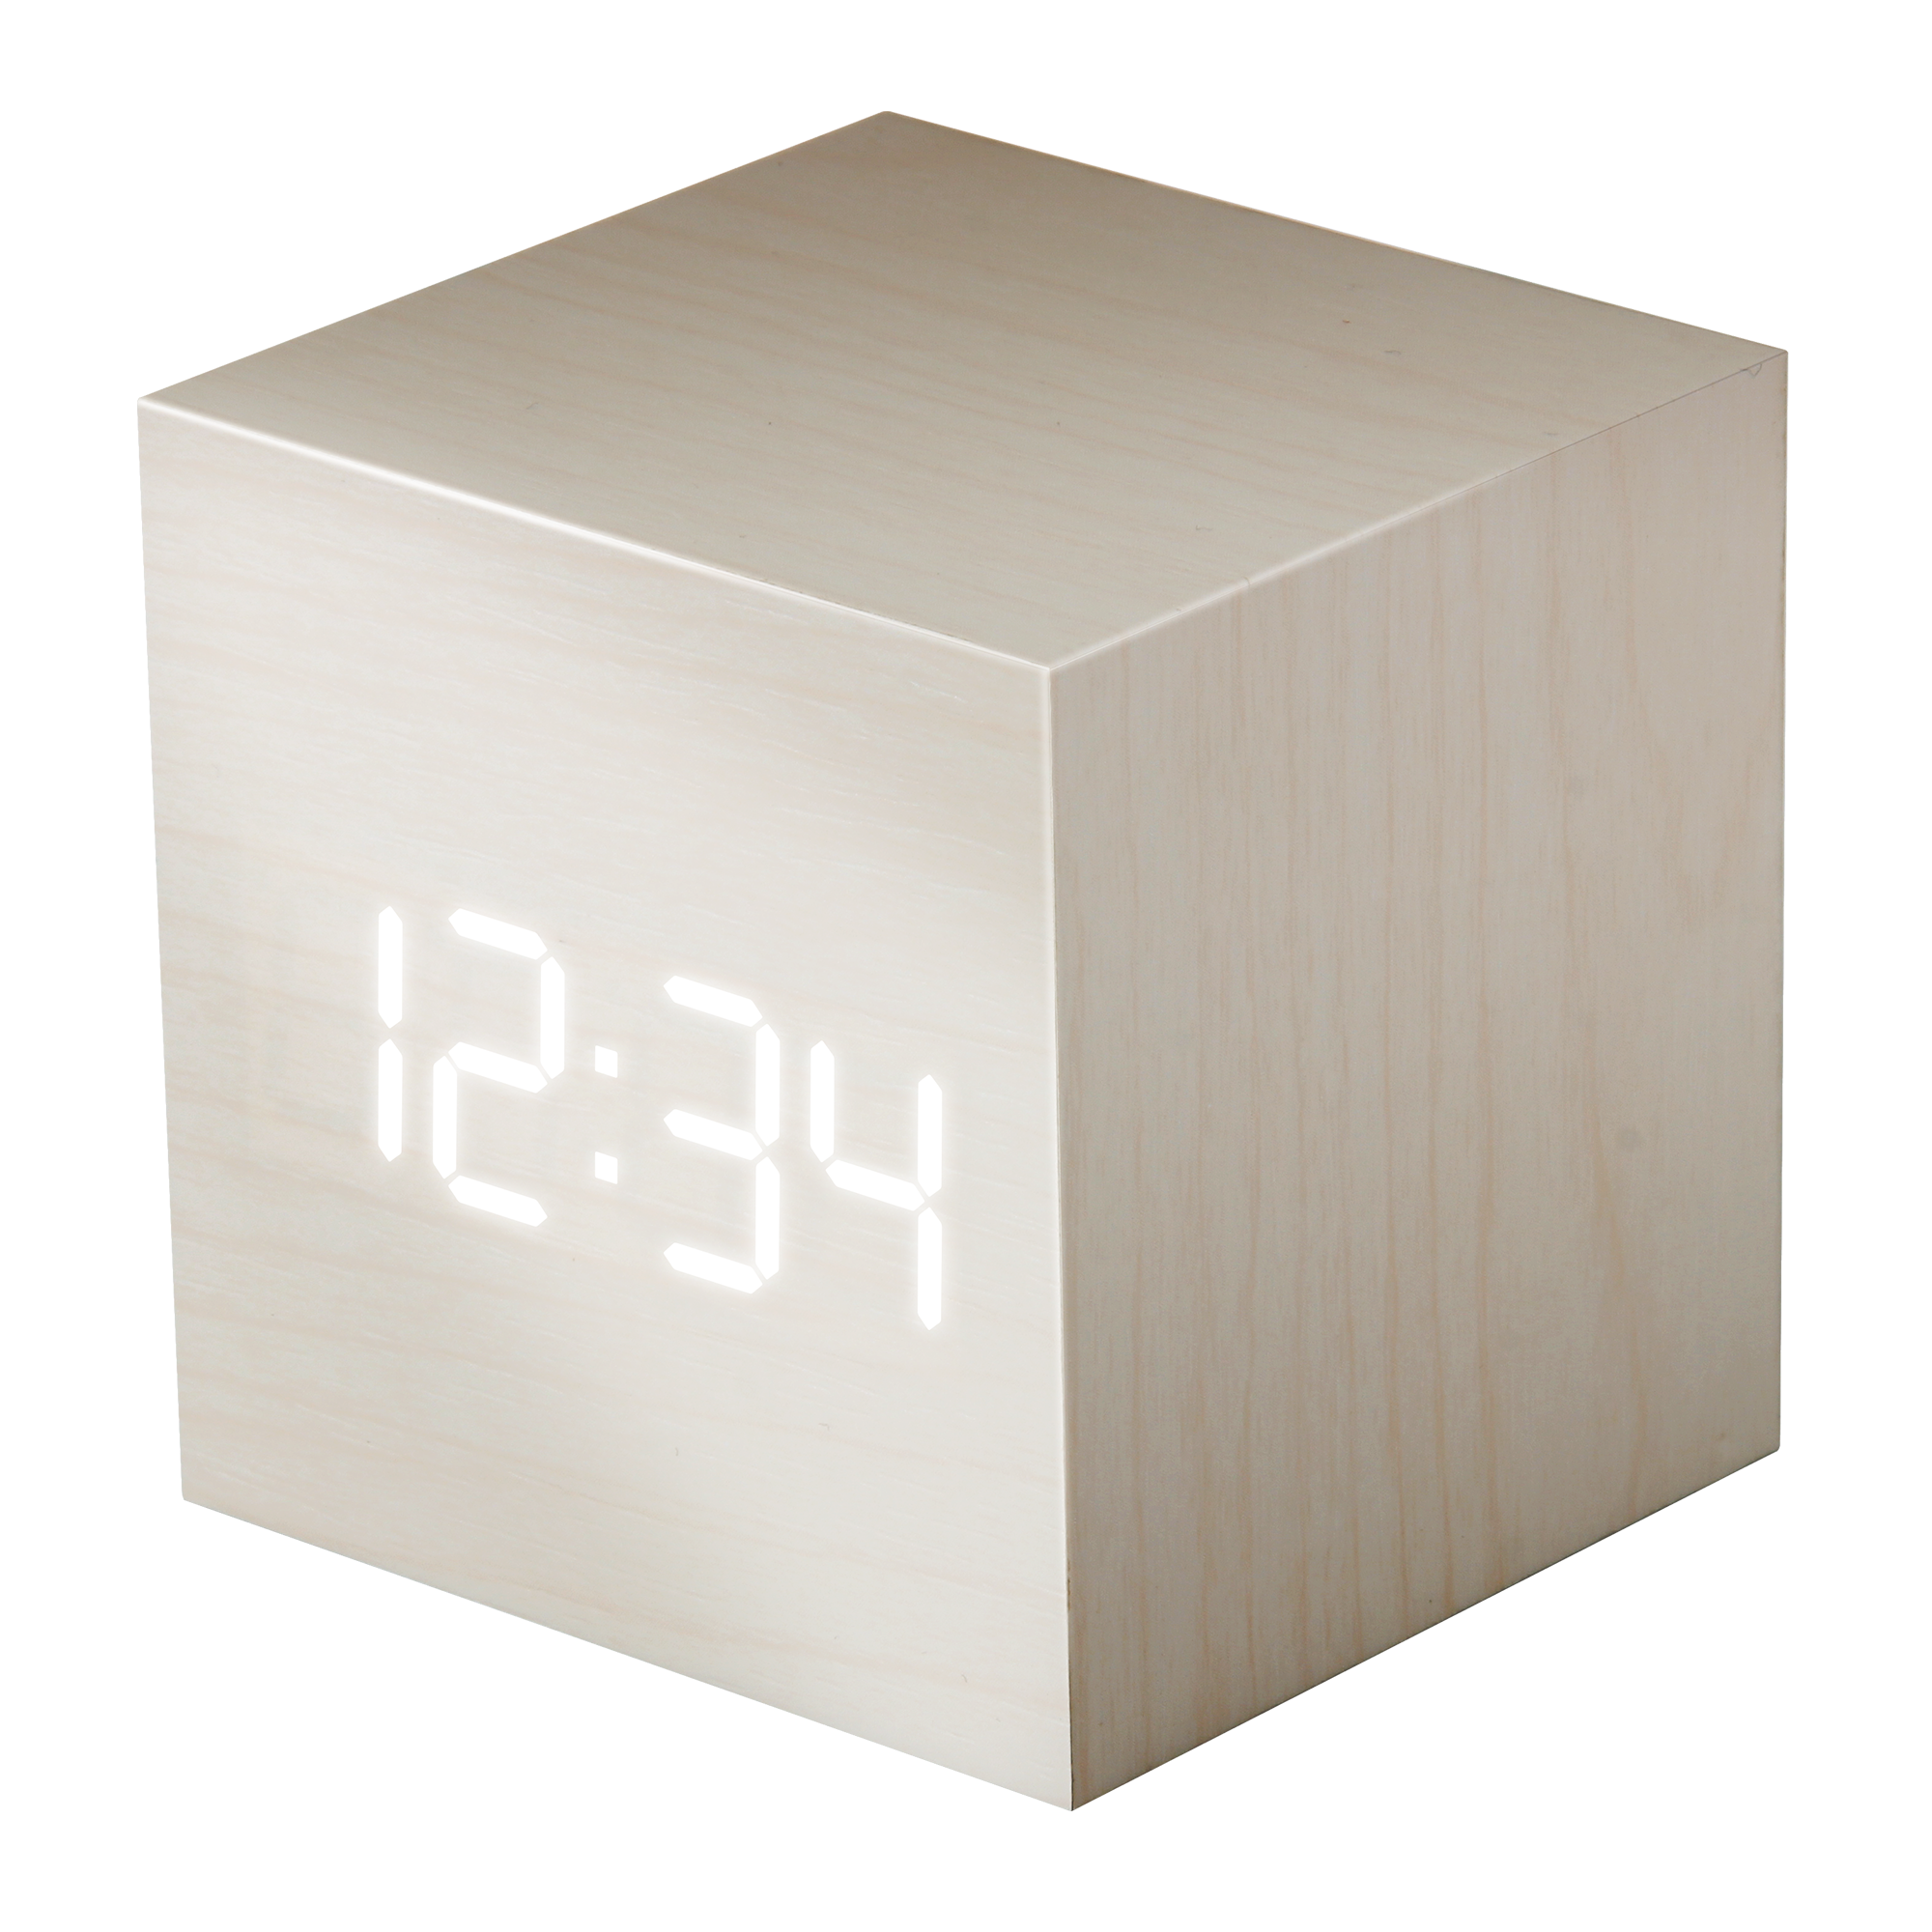  LecWec Alarm Clock, Silver, Small/Normall : Home & Kitchen